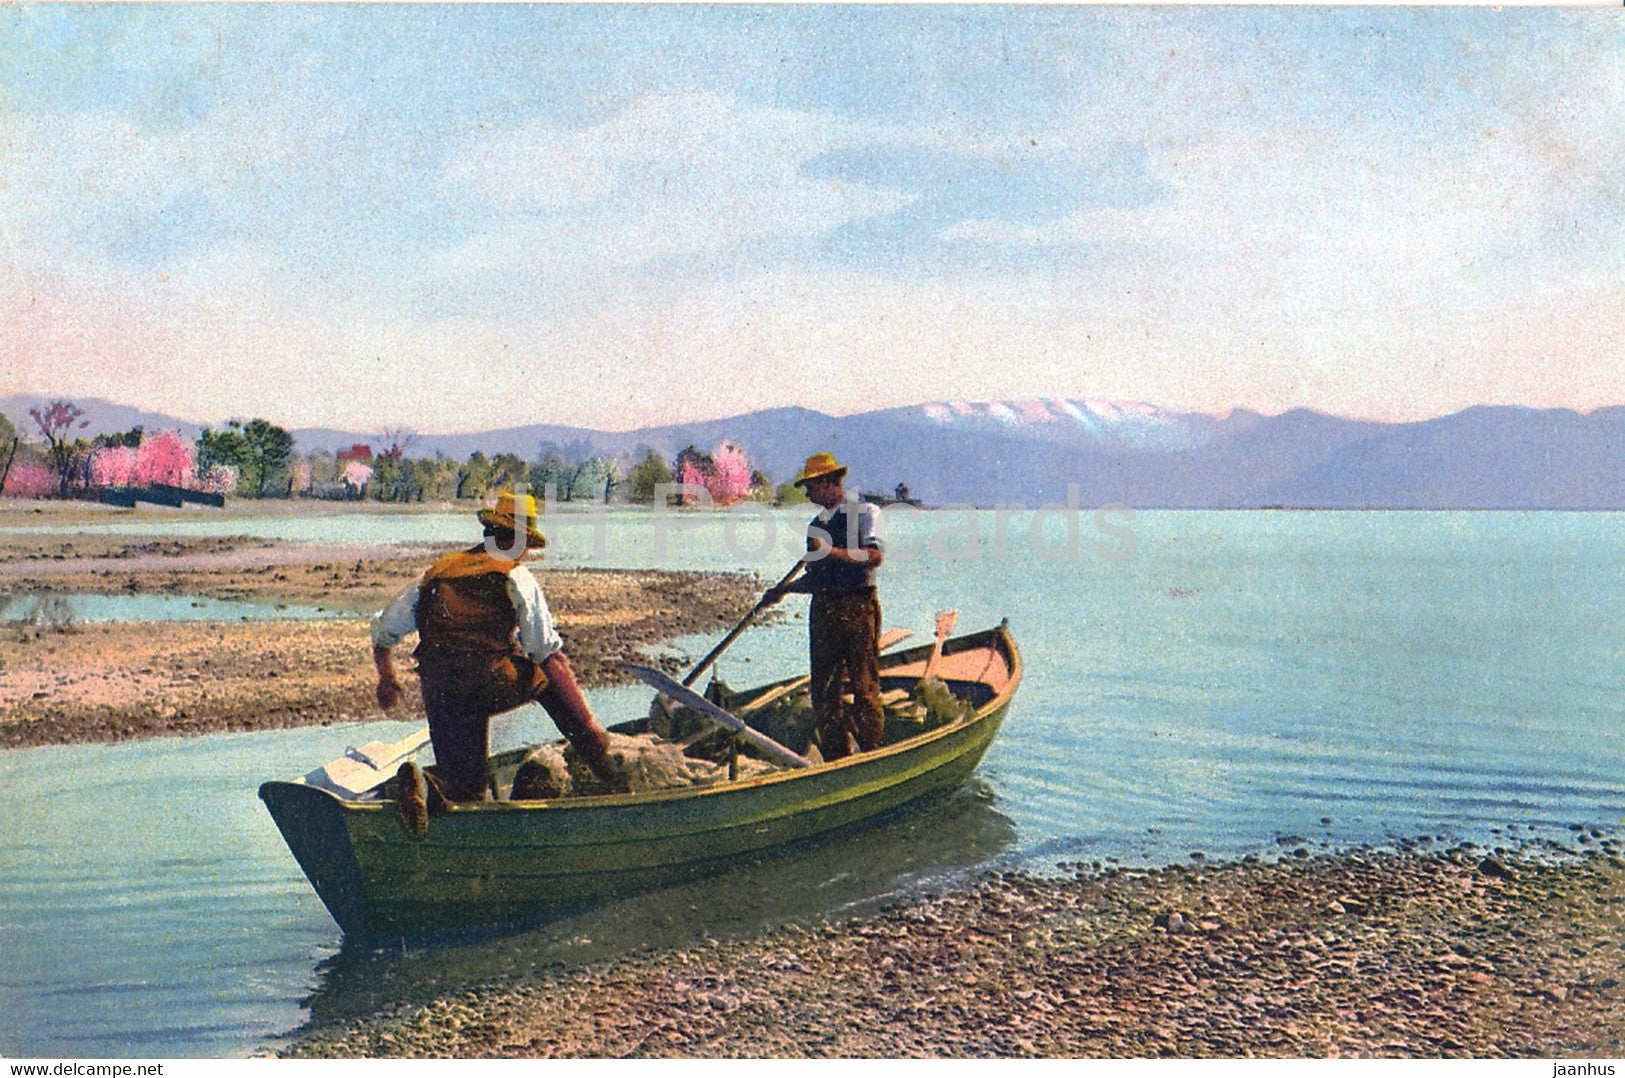 Bodensee bei Wasserburg - boat - Photochromie 3041 - Serie 172 - old postcard -  Germany - unused - JH Postcards